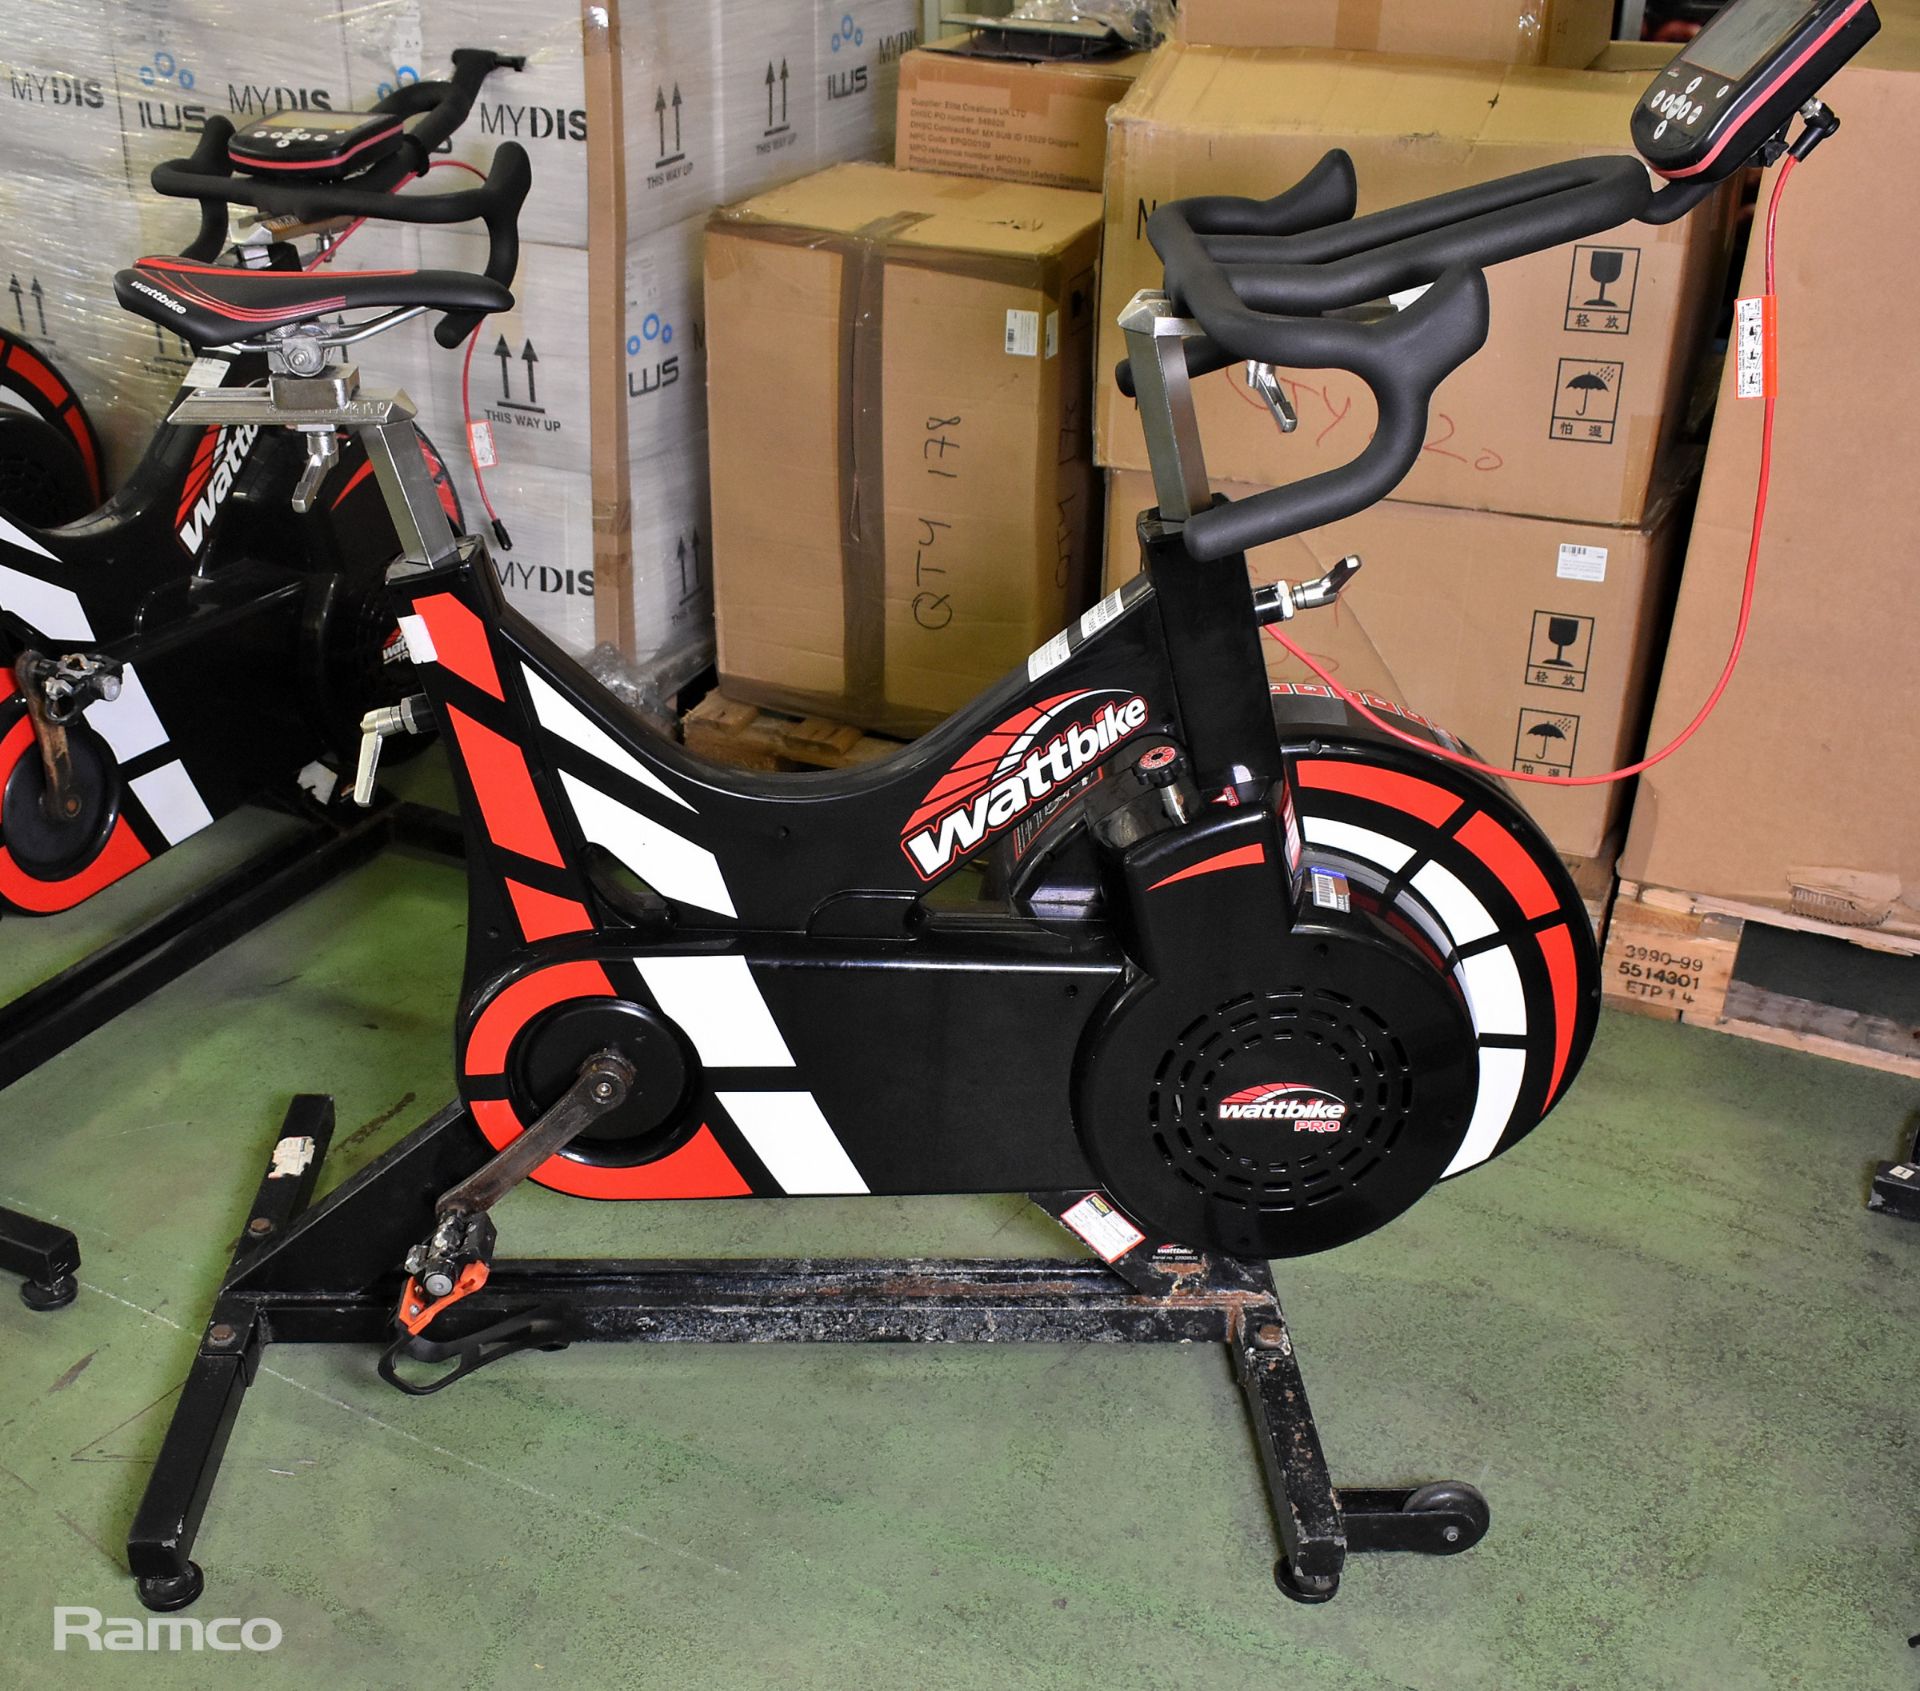 Wattbike Pro indoor exercise bike - L 120 x W 66 x H x 110cm - Image 2 of 7